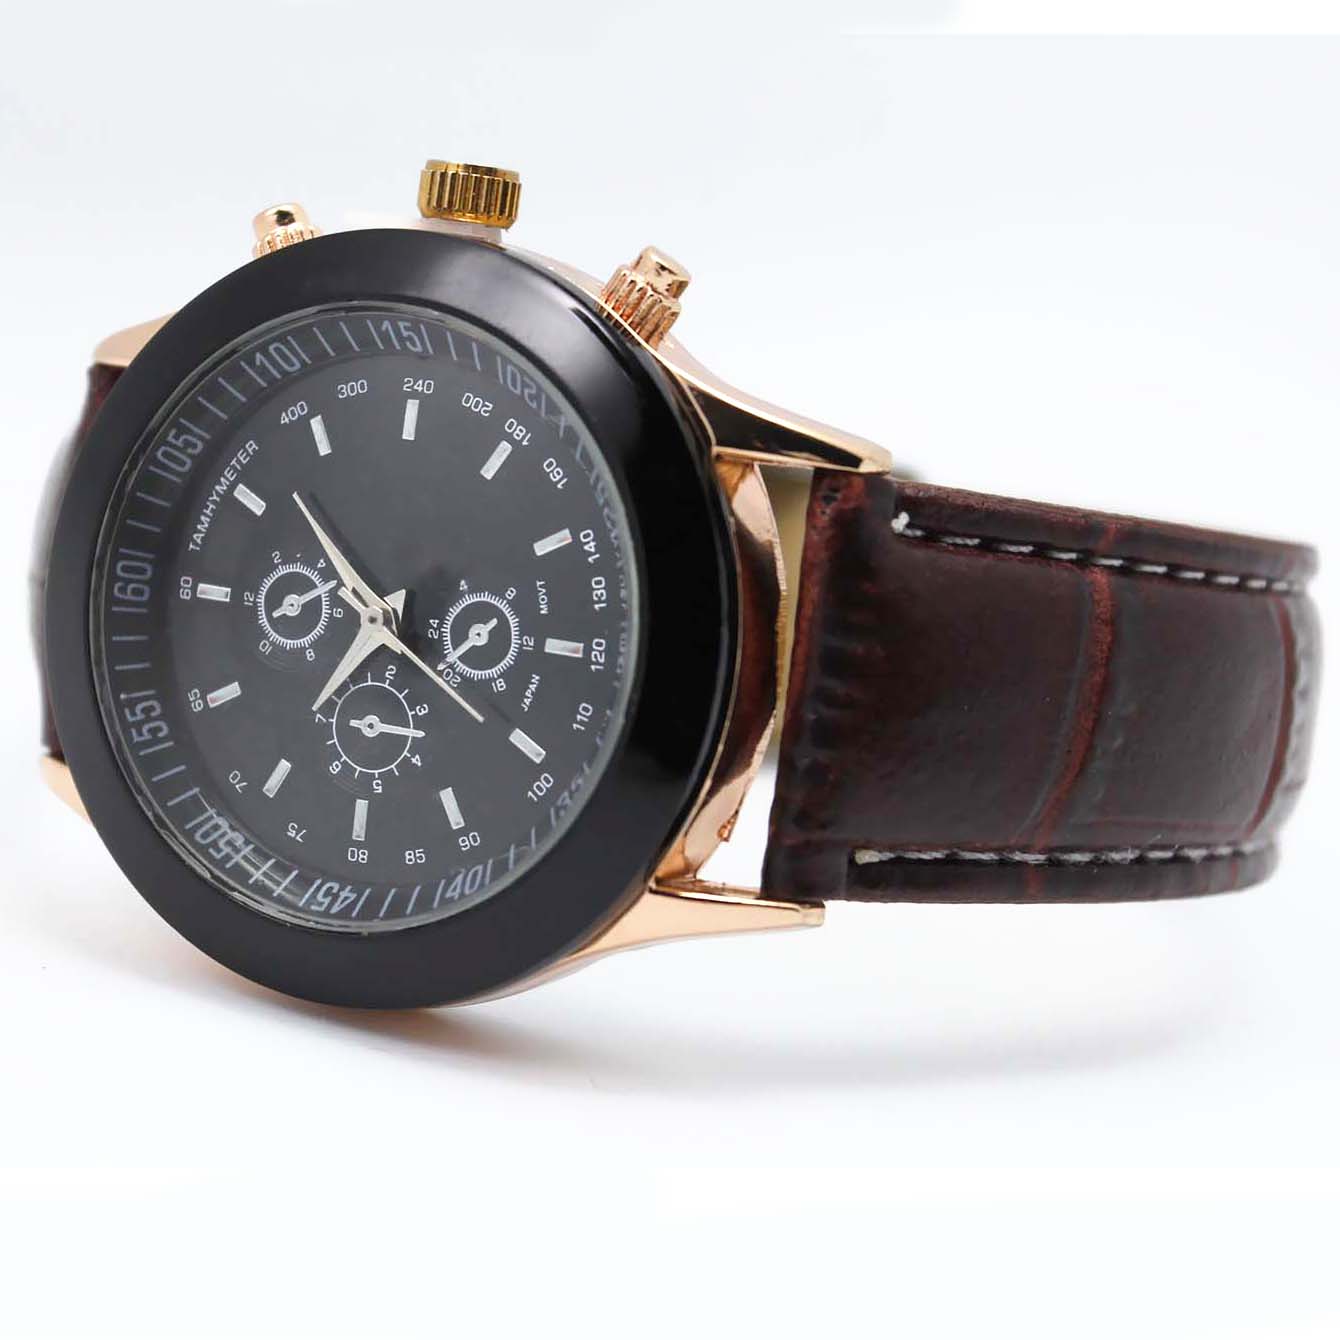 #02113Men's wristwatch quartz analog leather strap watch